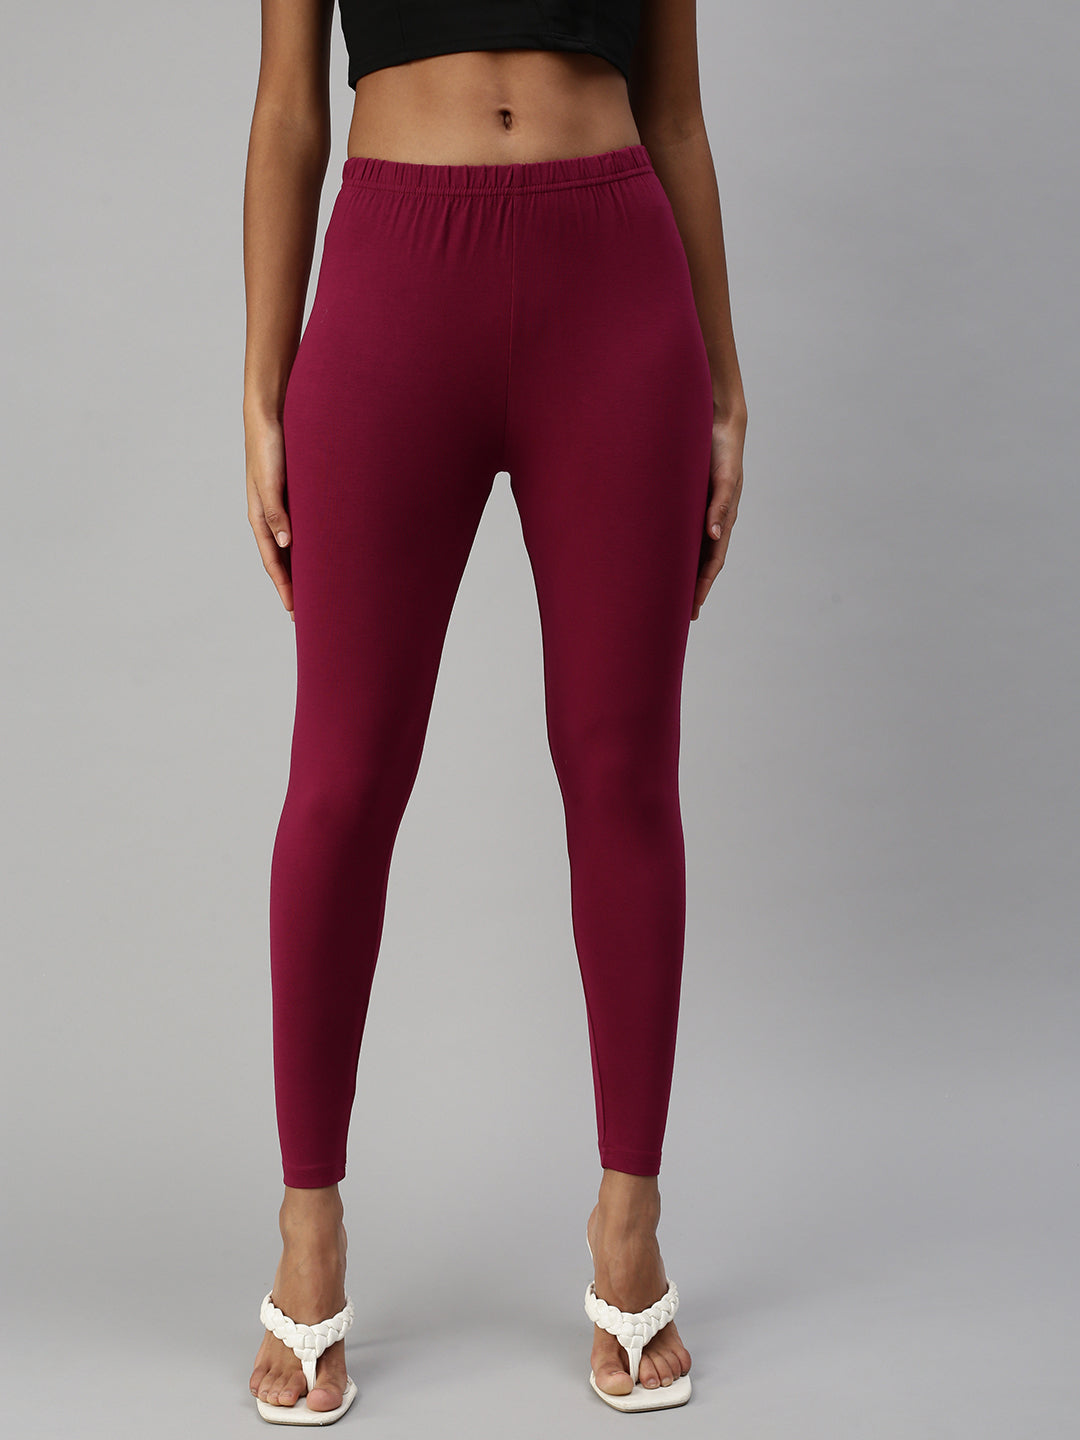 Super Soft Yoga Leggings - Pink Spliced Gradient Print | Women's Leggings |  Sweaty Betty